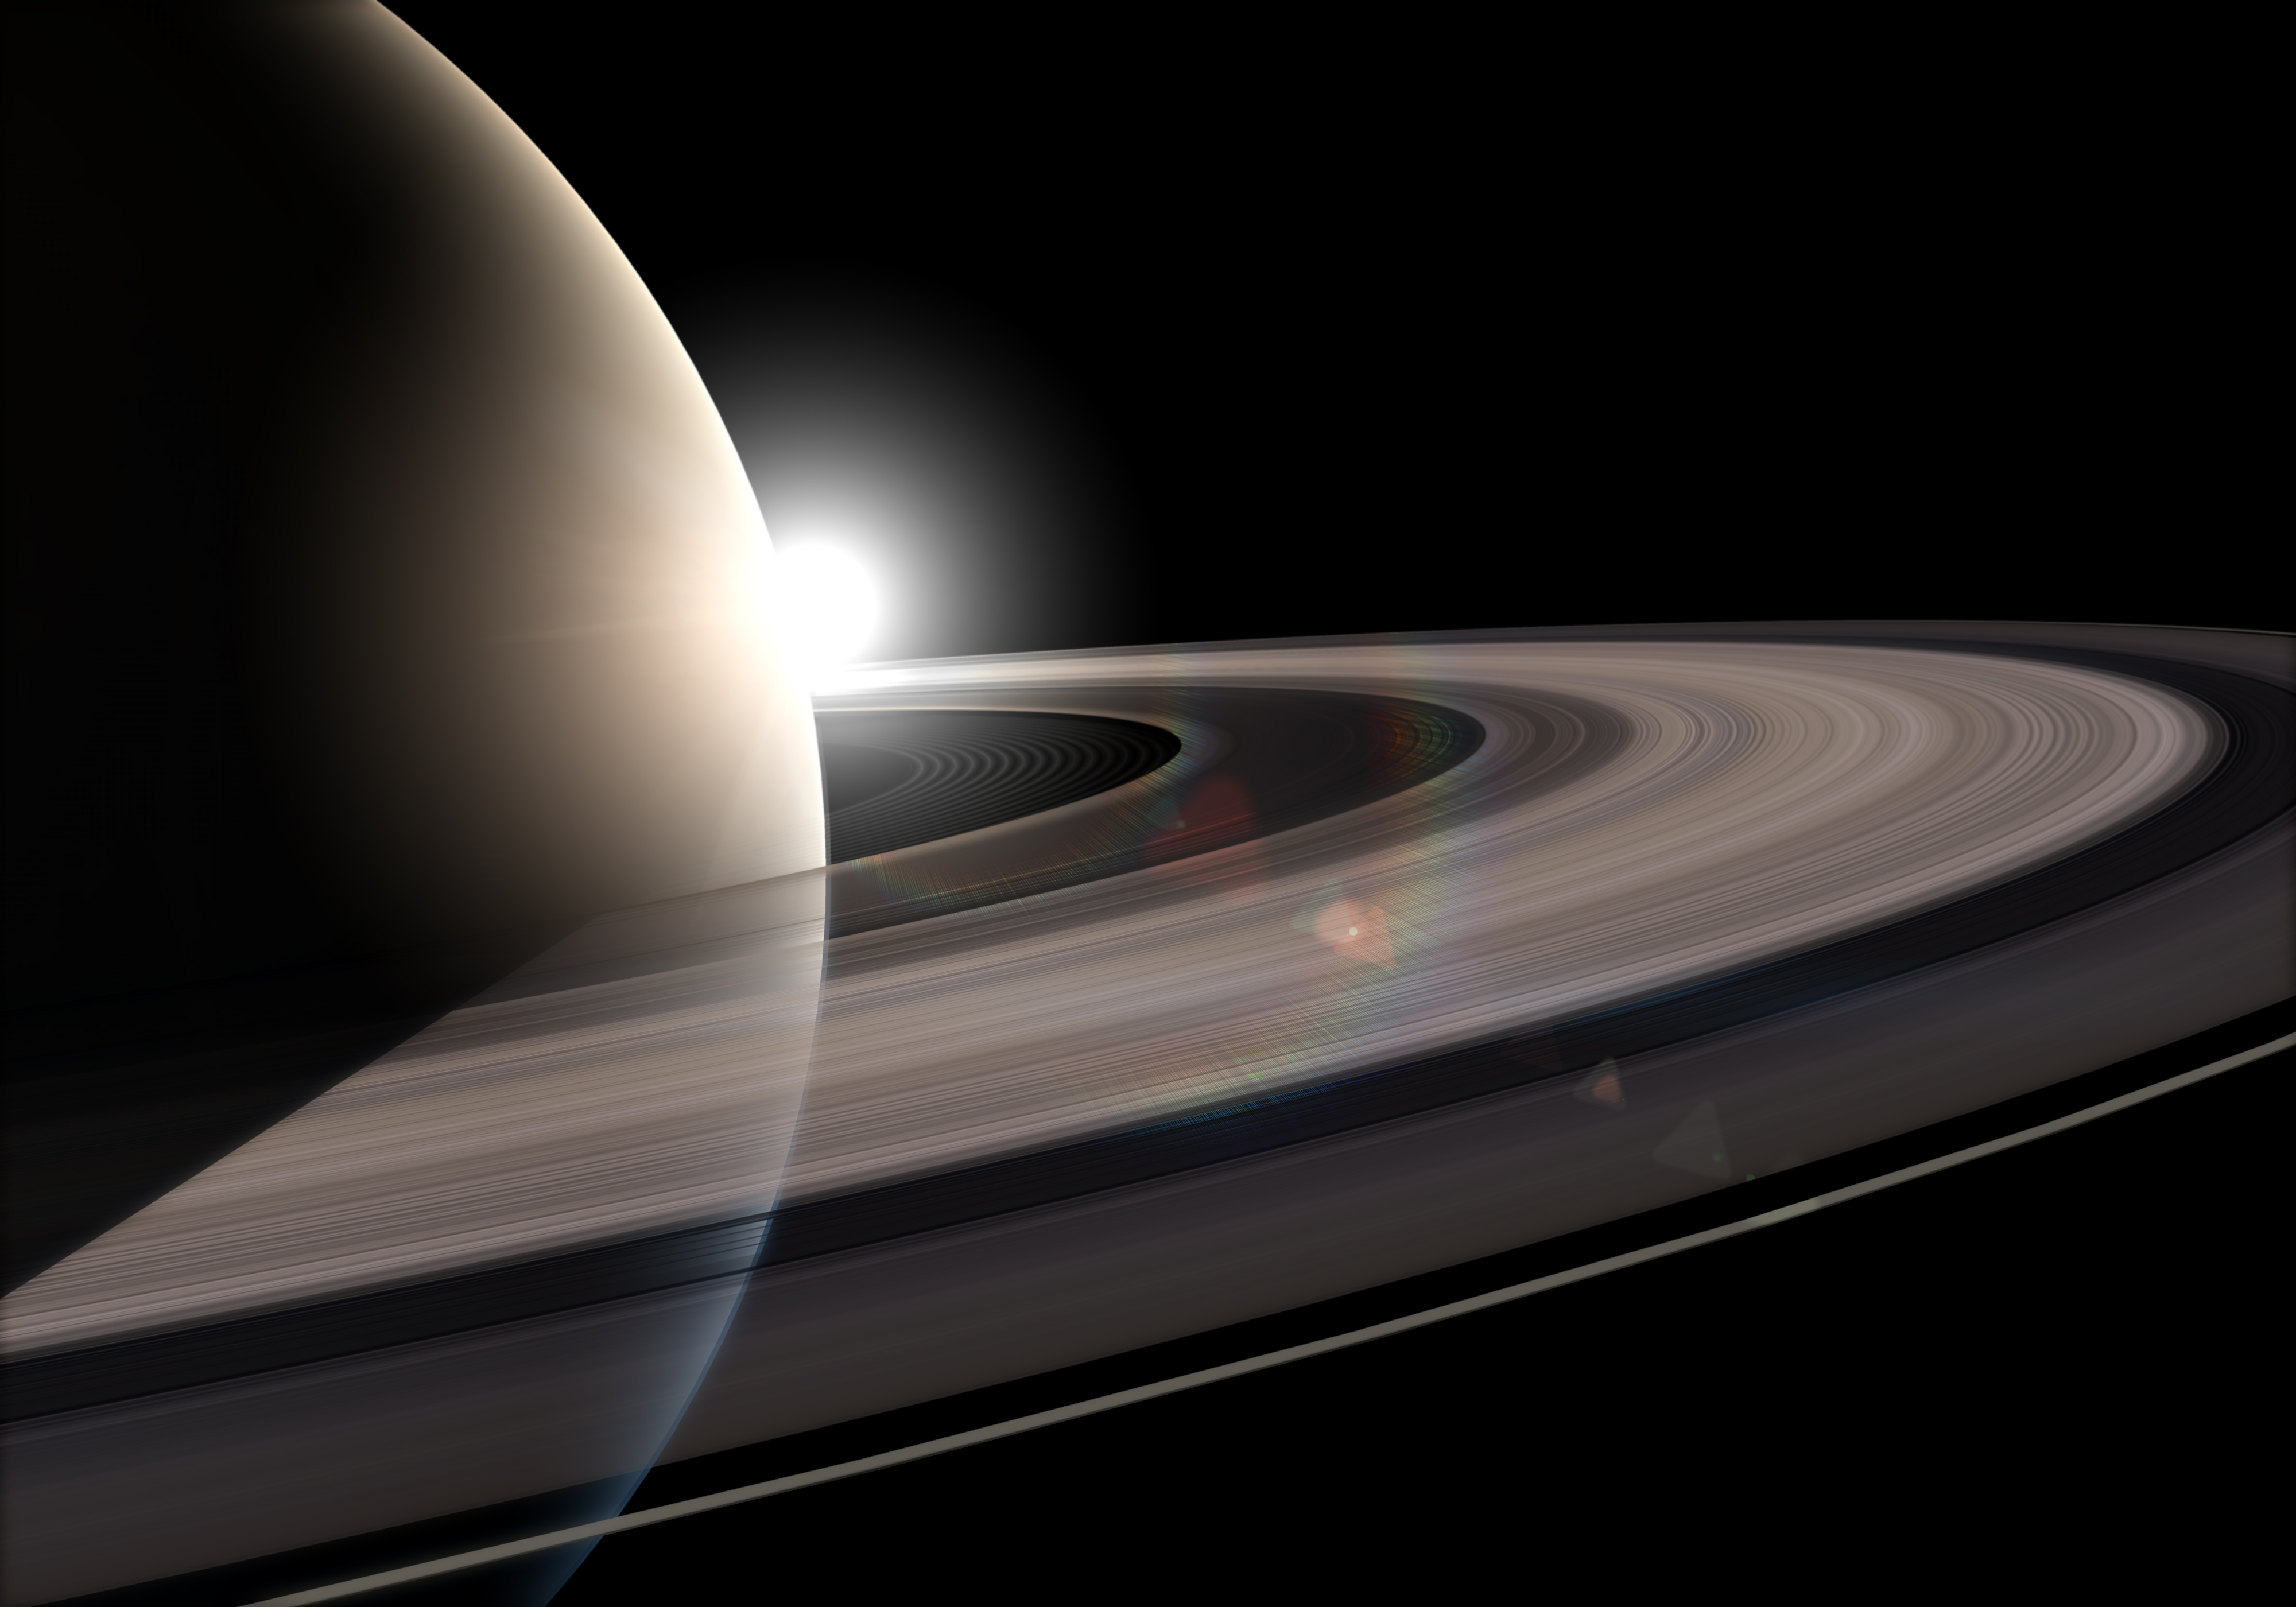 Artist S Impression Of Saturn Rings Esa Hubble